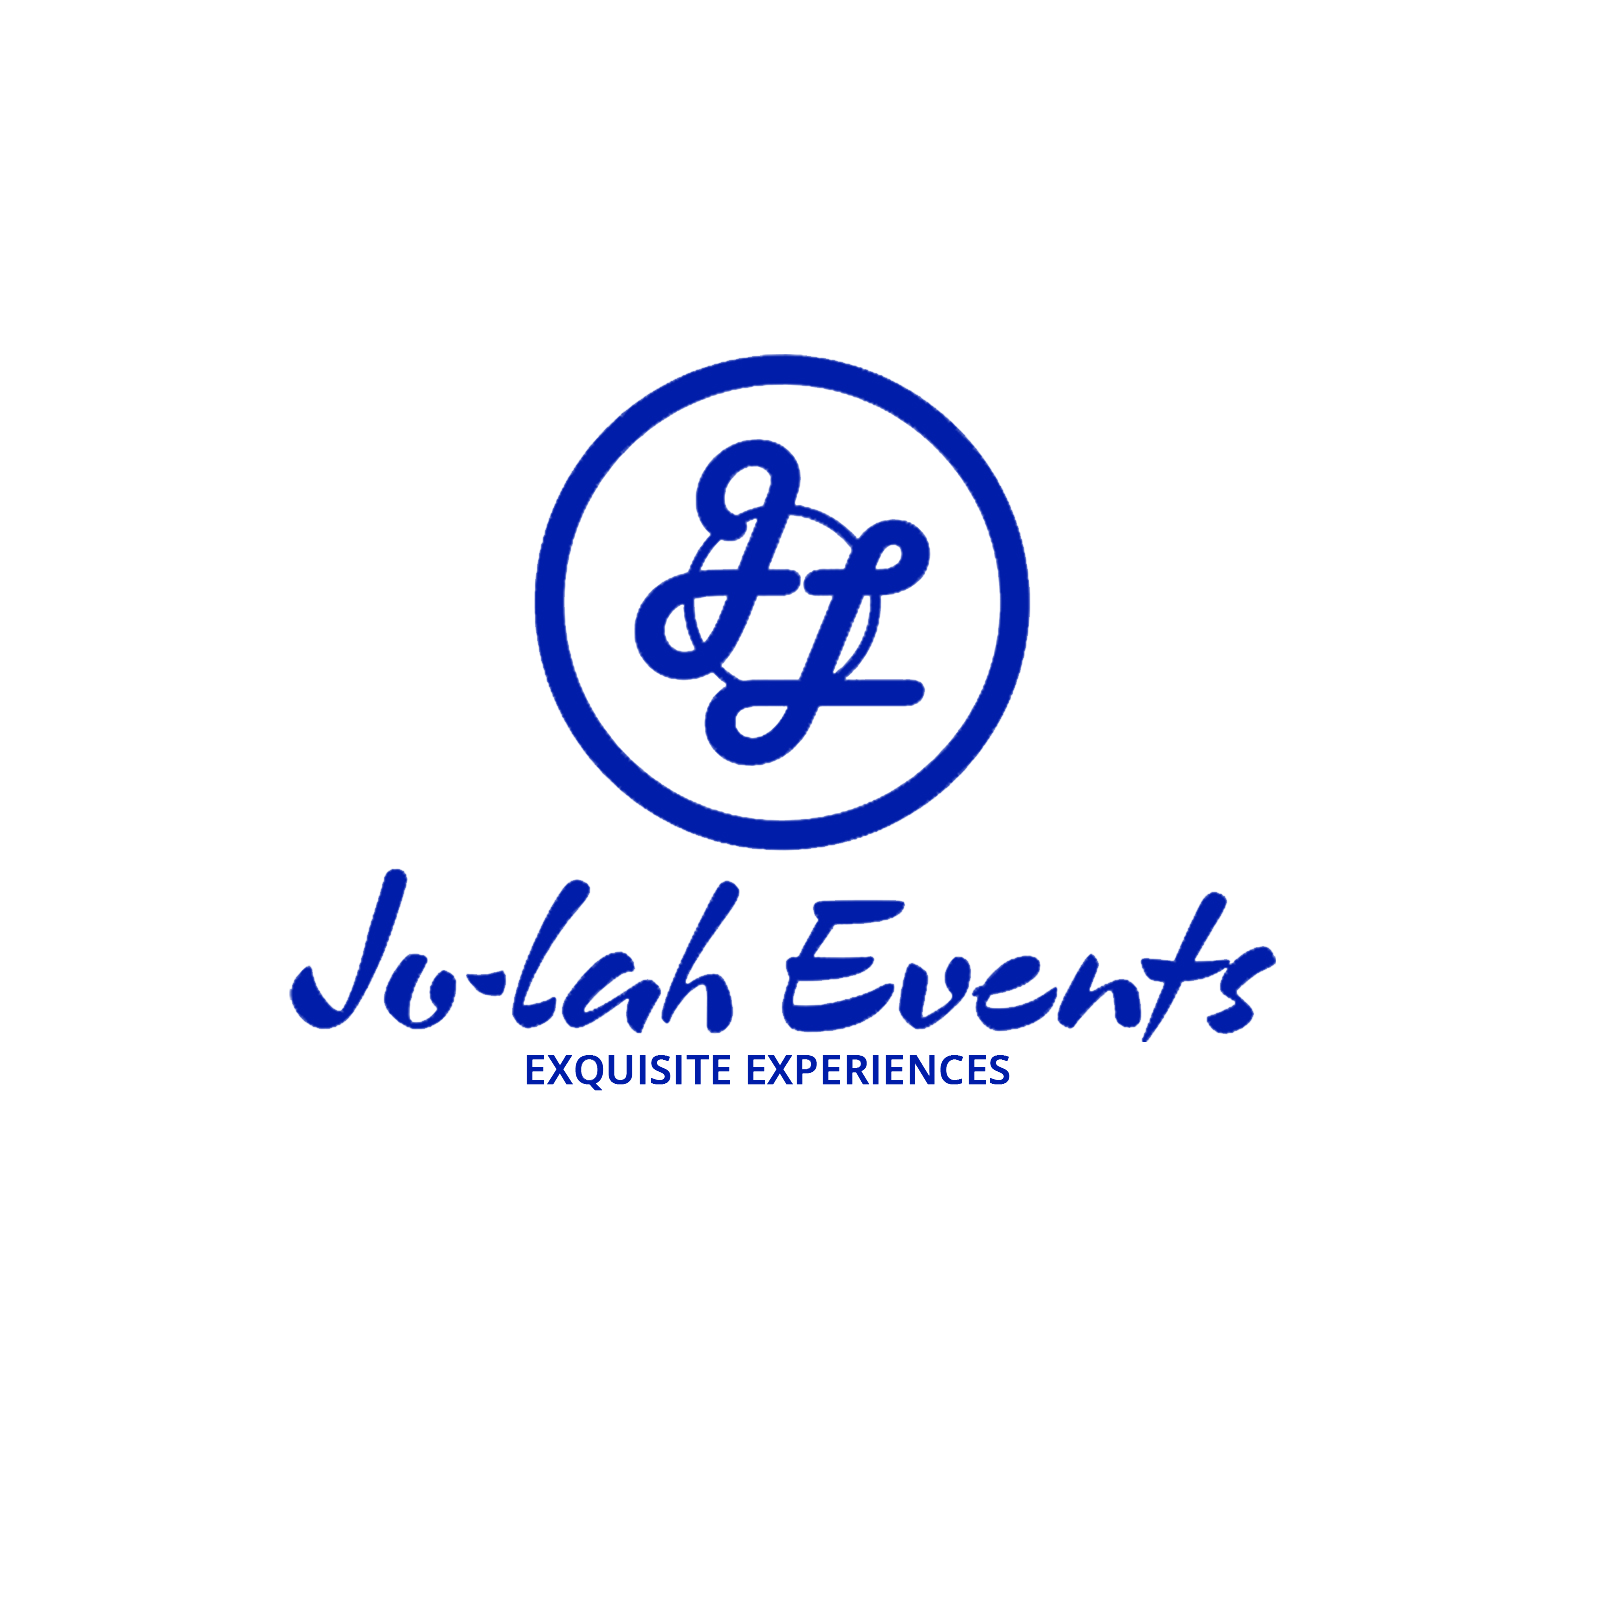 Jo-lah Events provider